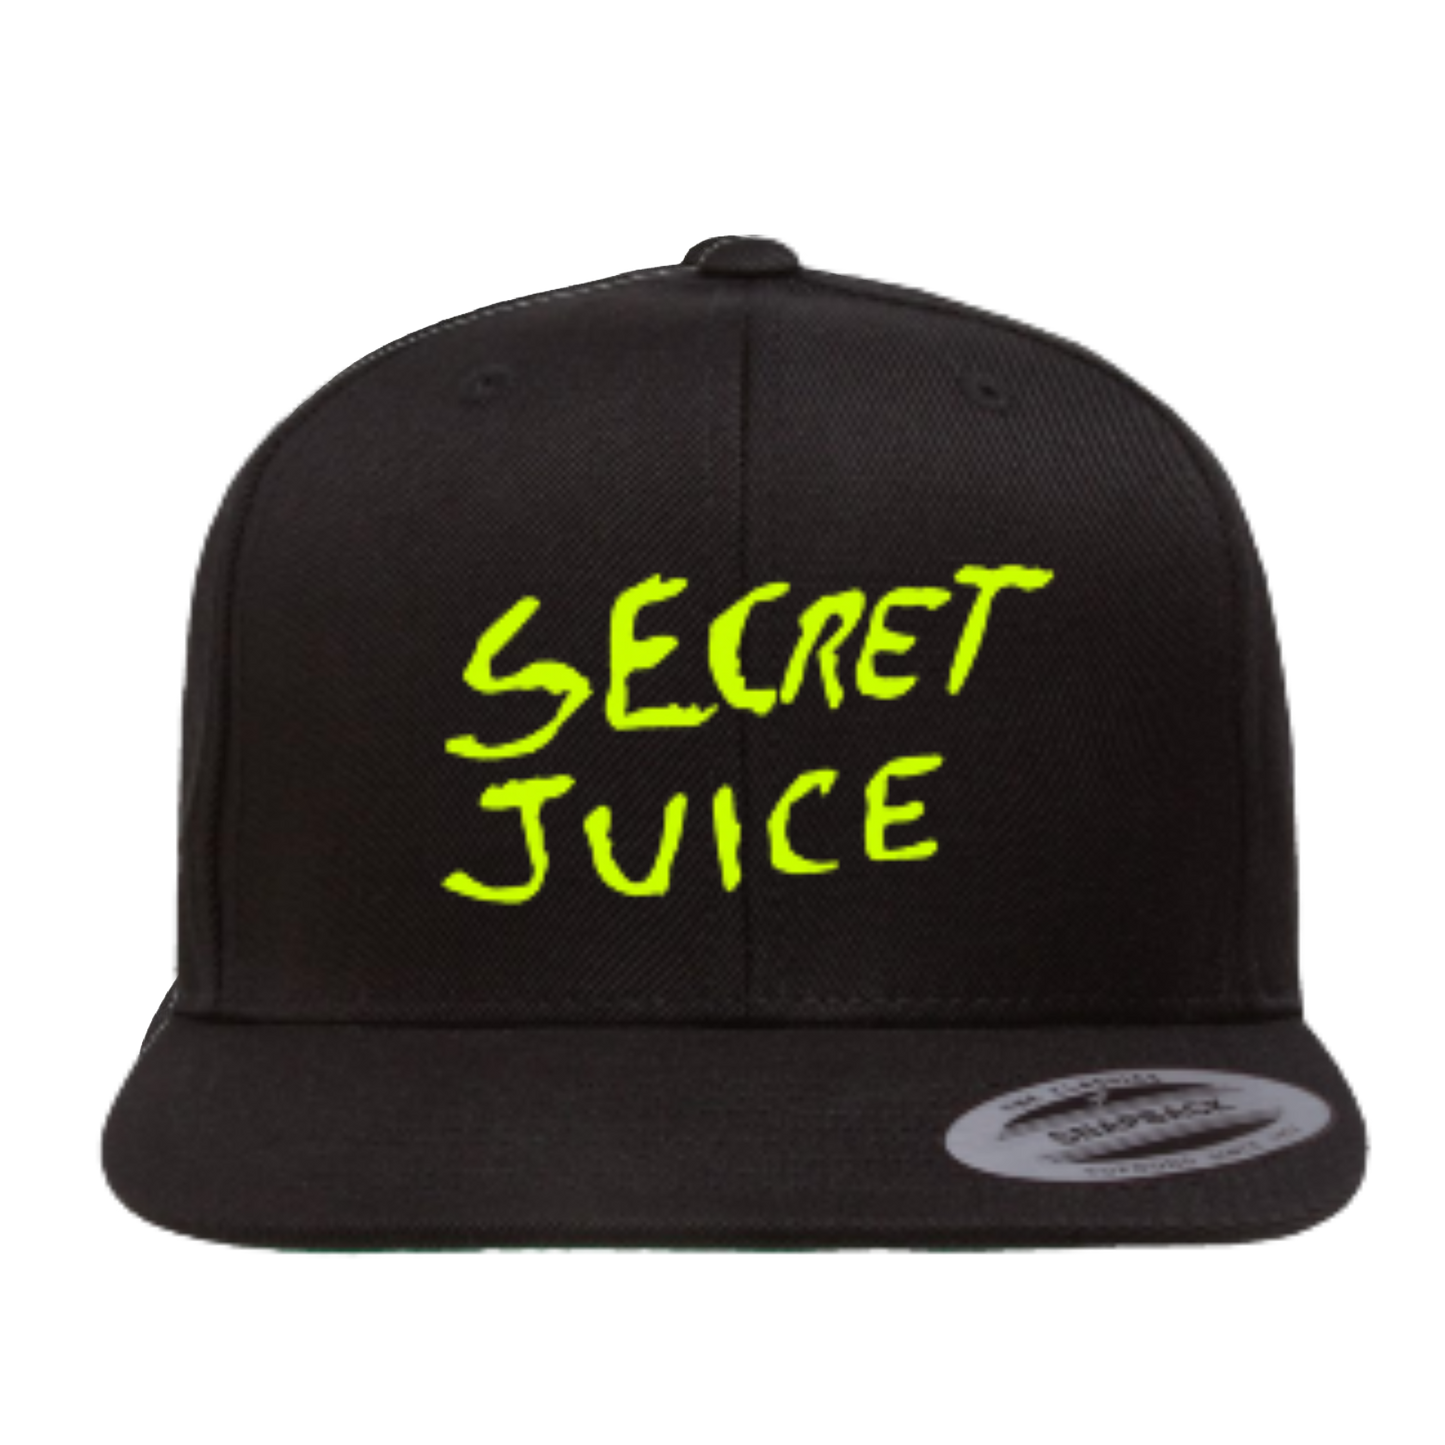 Secret Juice - Snapback (Black)